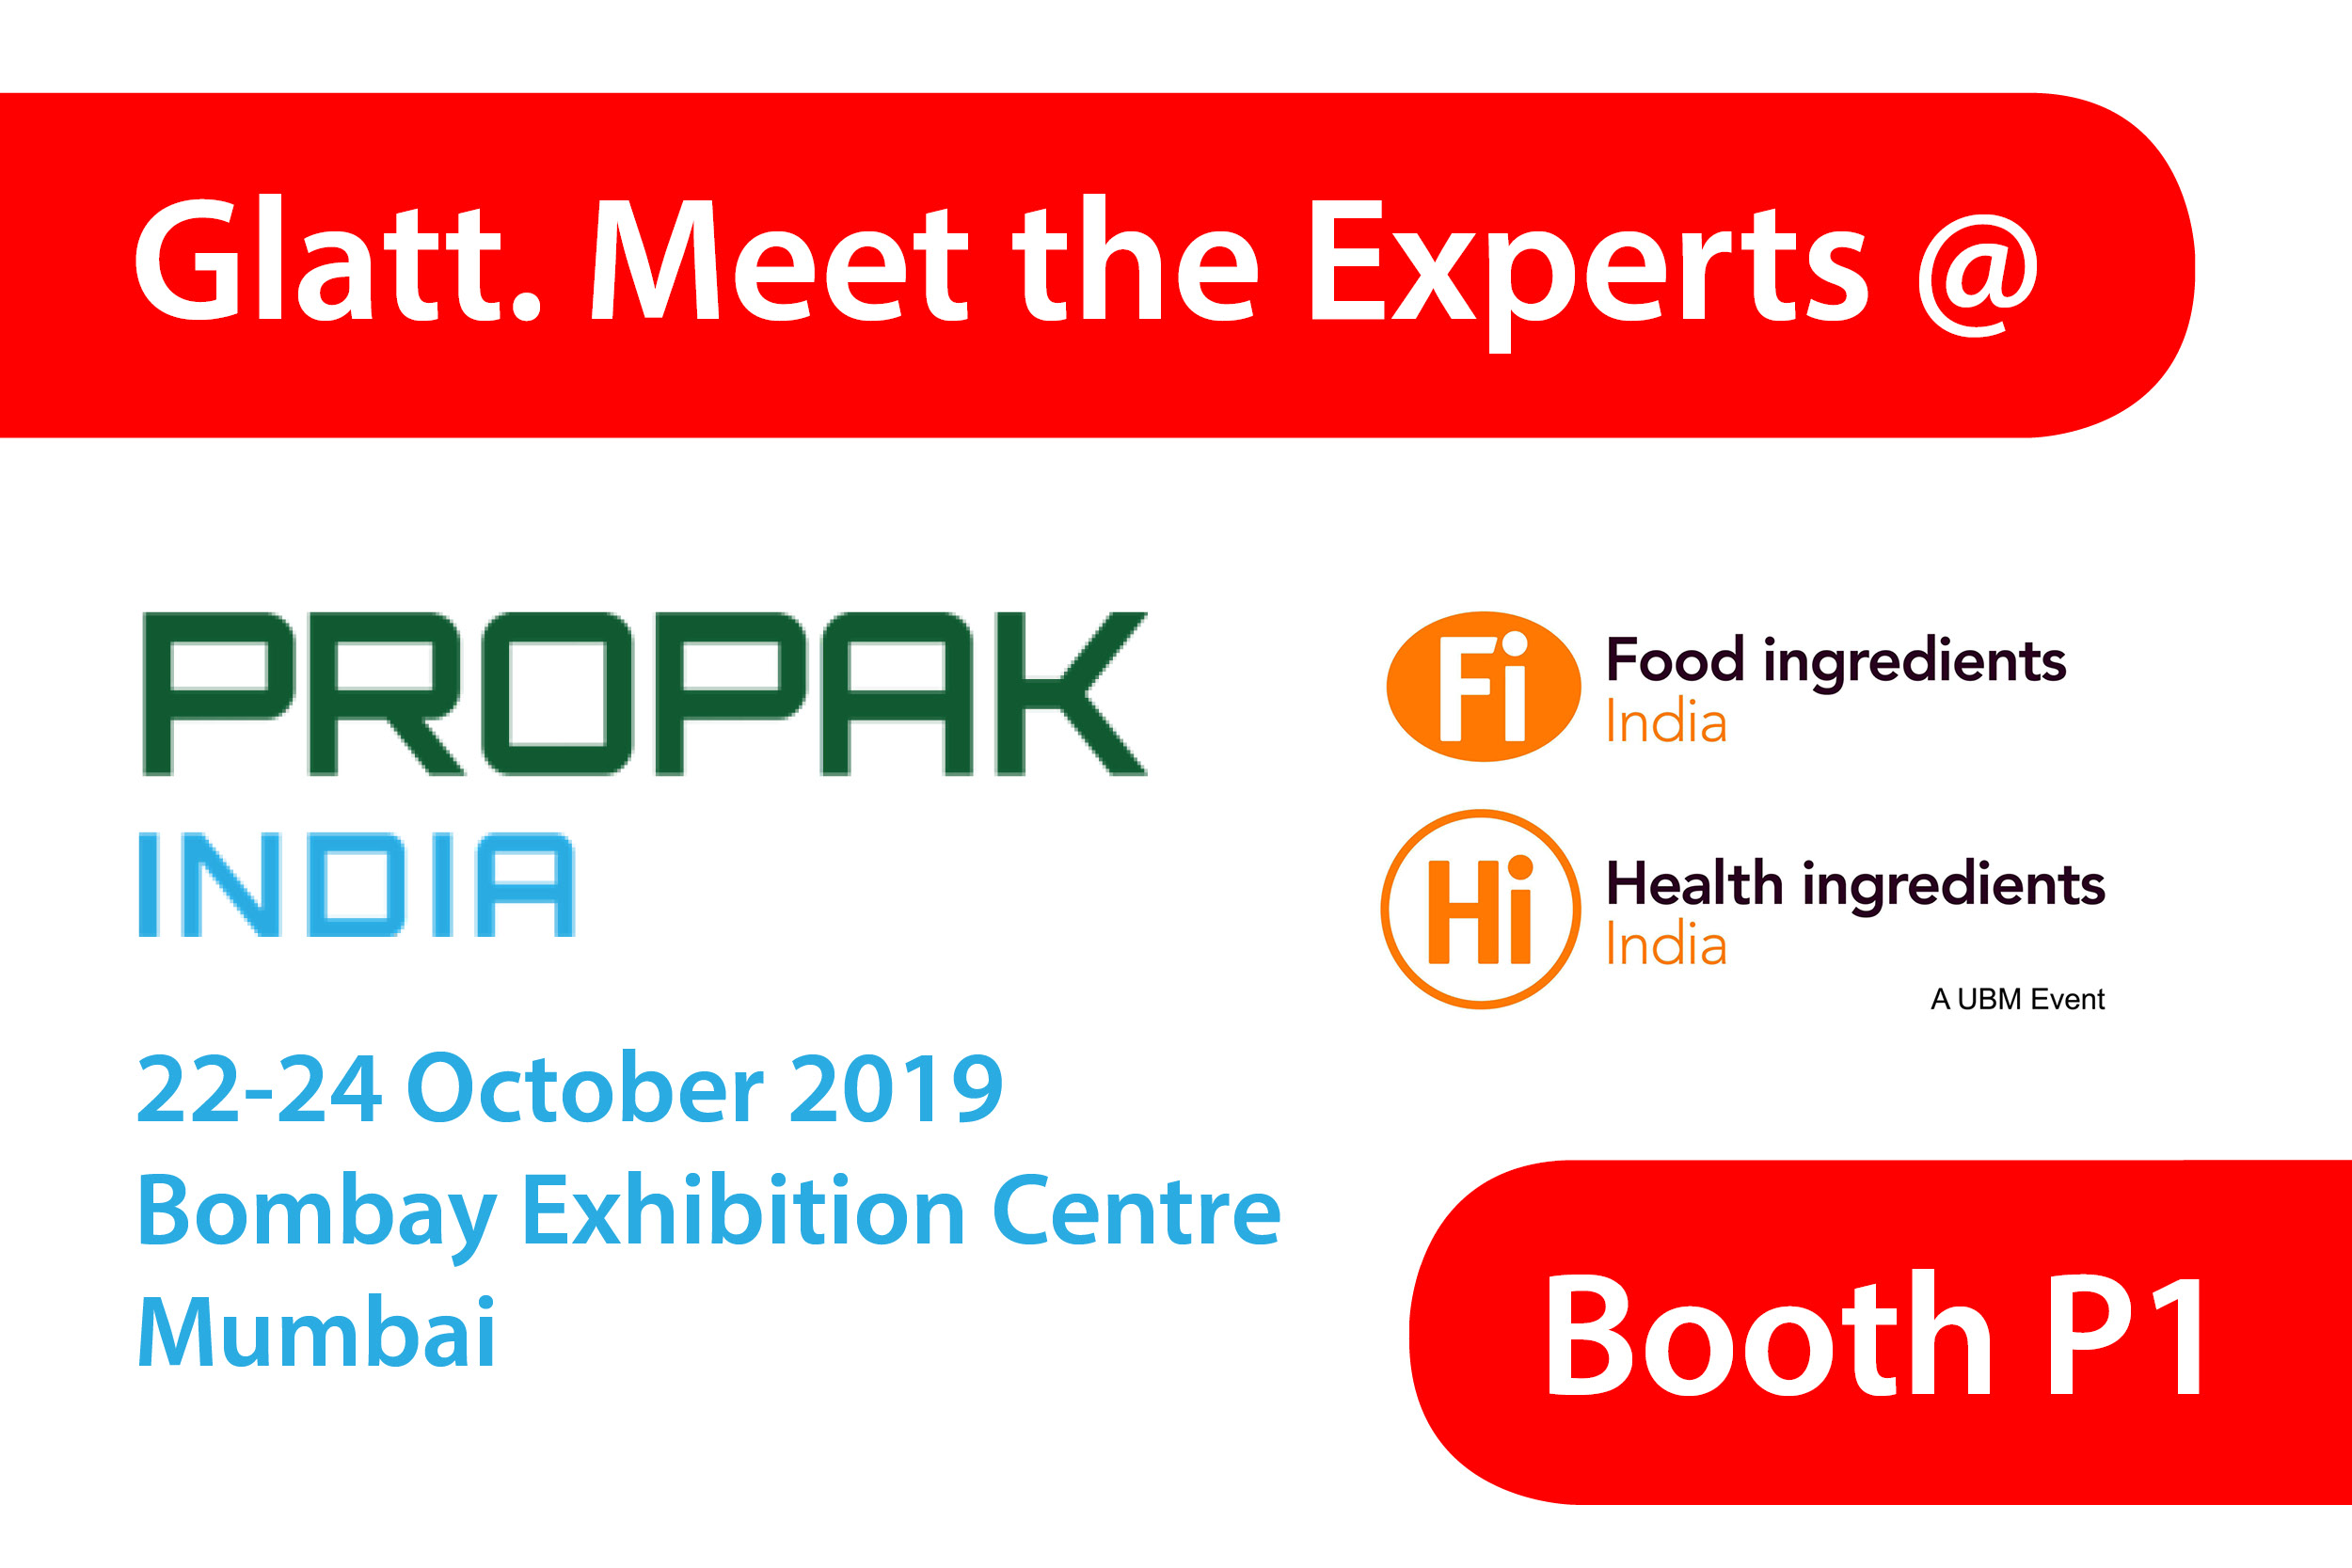 Meet the Glatt Experts @ ProPack India 2019 together with Fi Food Ingredients / Hi Health Ingredients India 2019, 22-24 Oktober in Mumbai